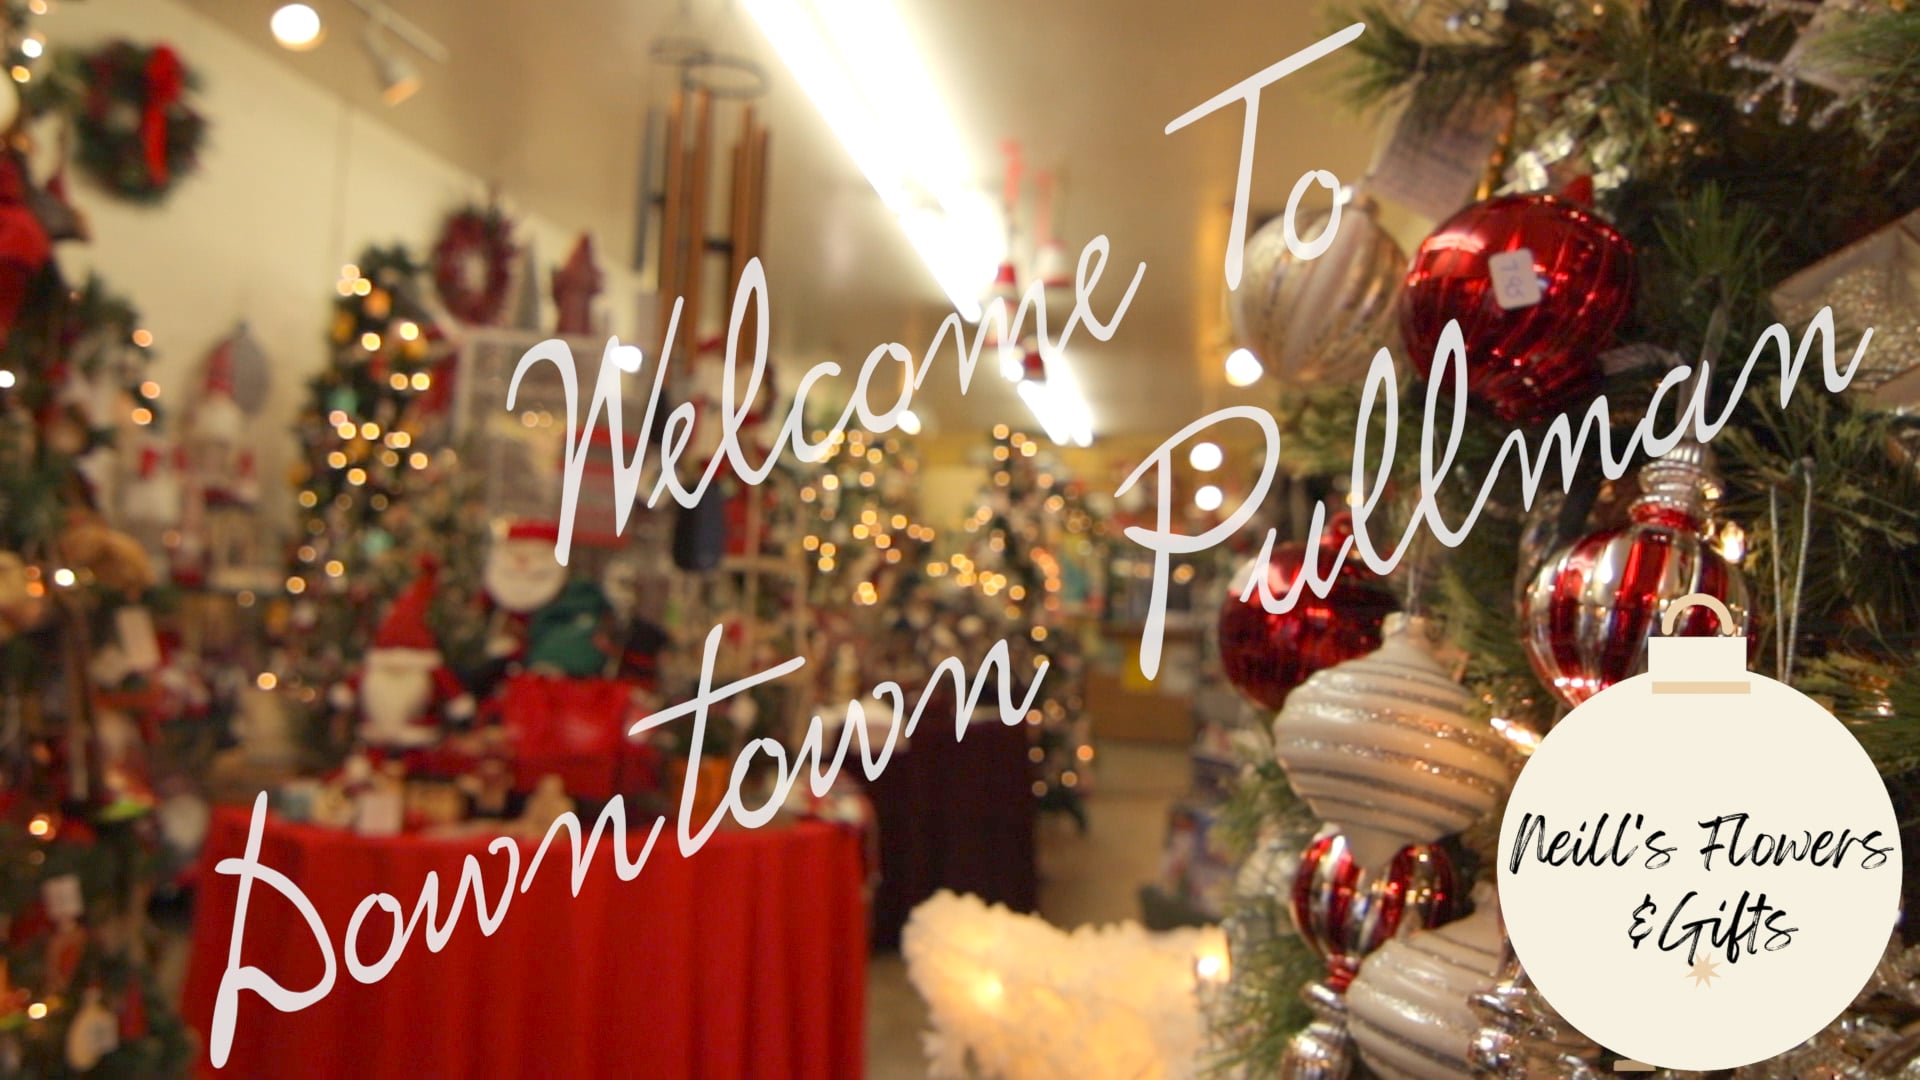 Downtown Pullman Christmas 3.mov on Vimeo